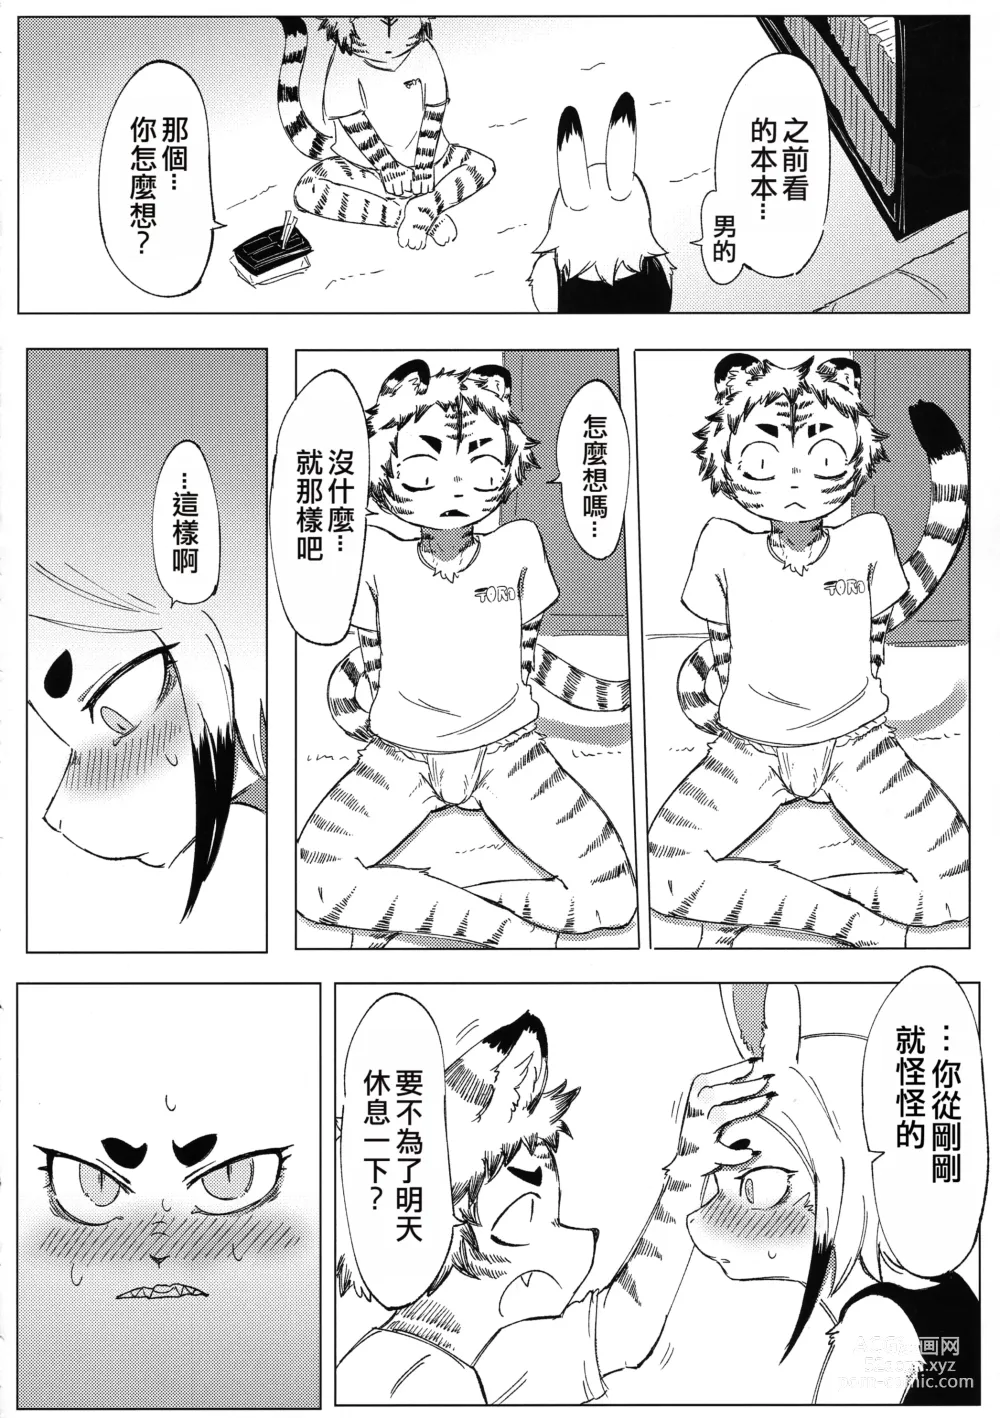 Page 12 of doujinshi 祭典前日